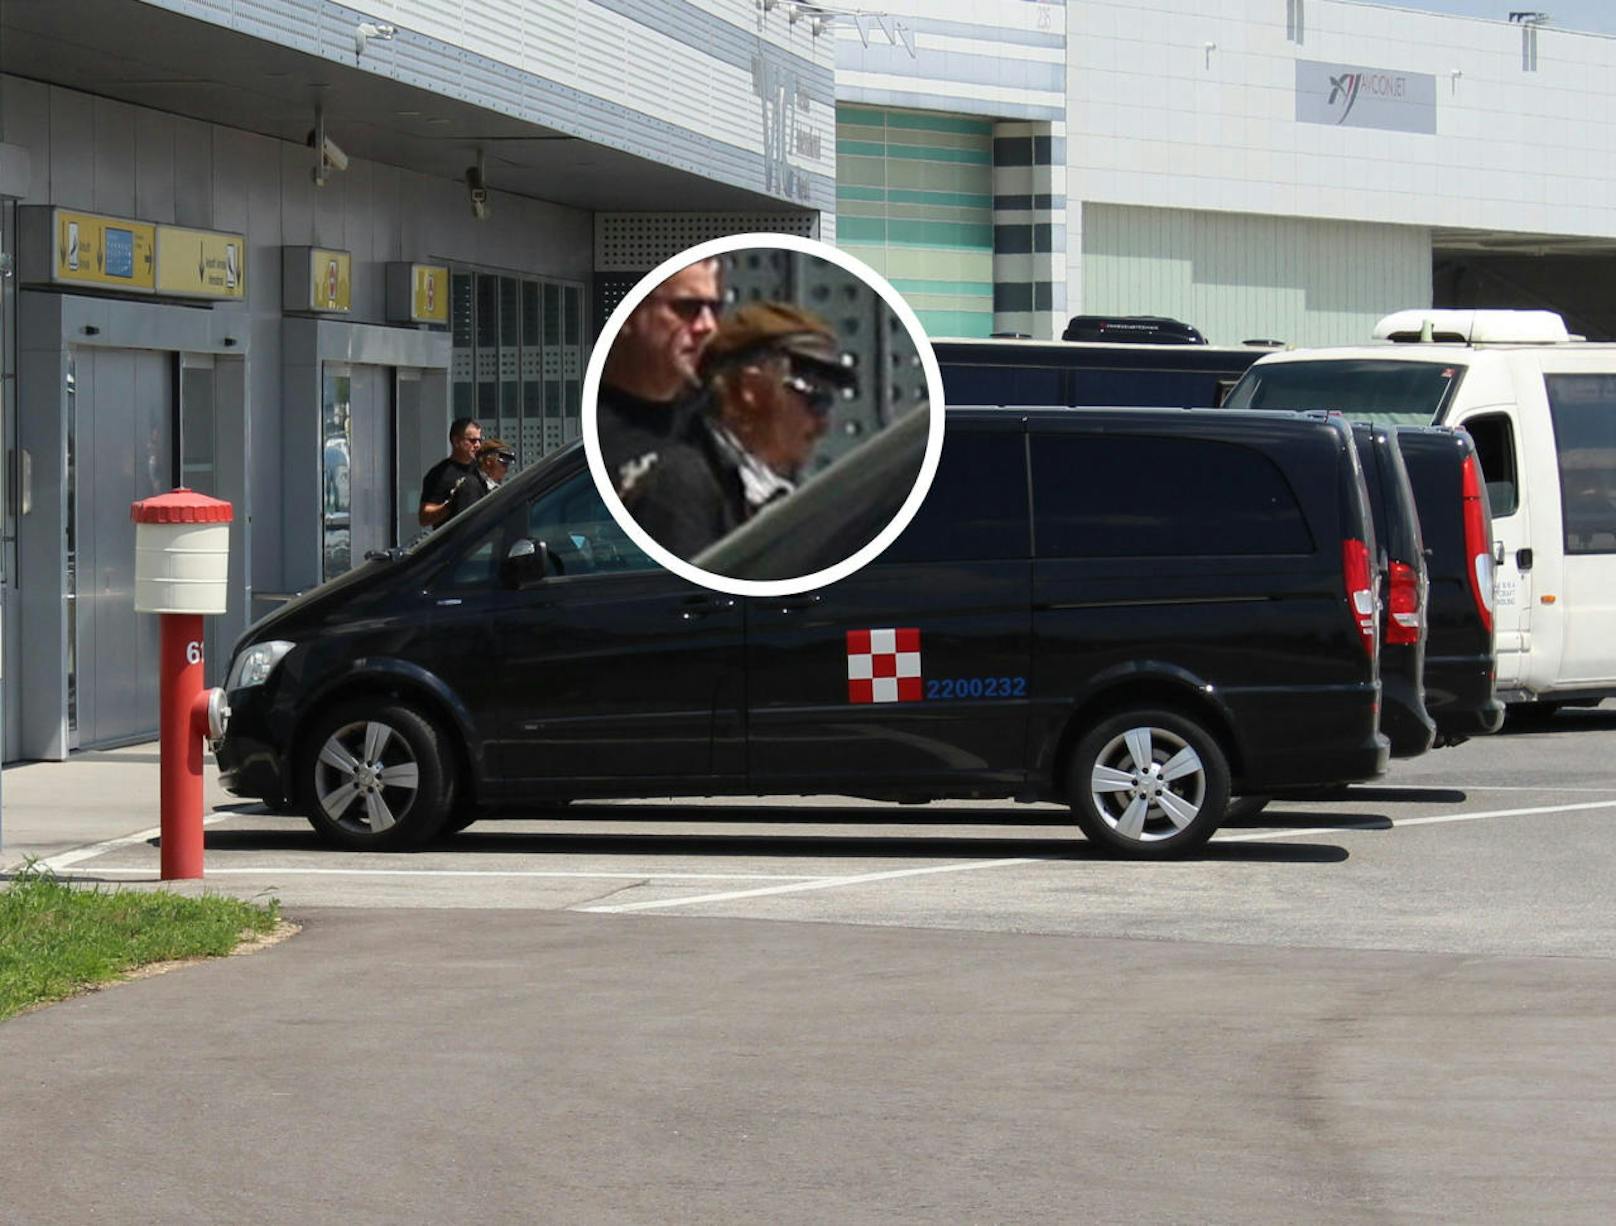 Johnny Depp am Weg zu seinem Privatjet am Flughafen Wien-Schwechat